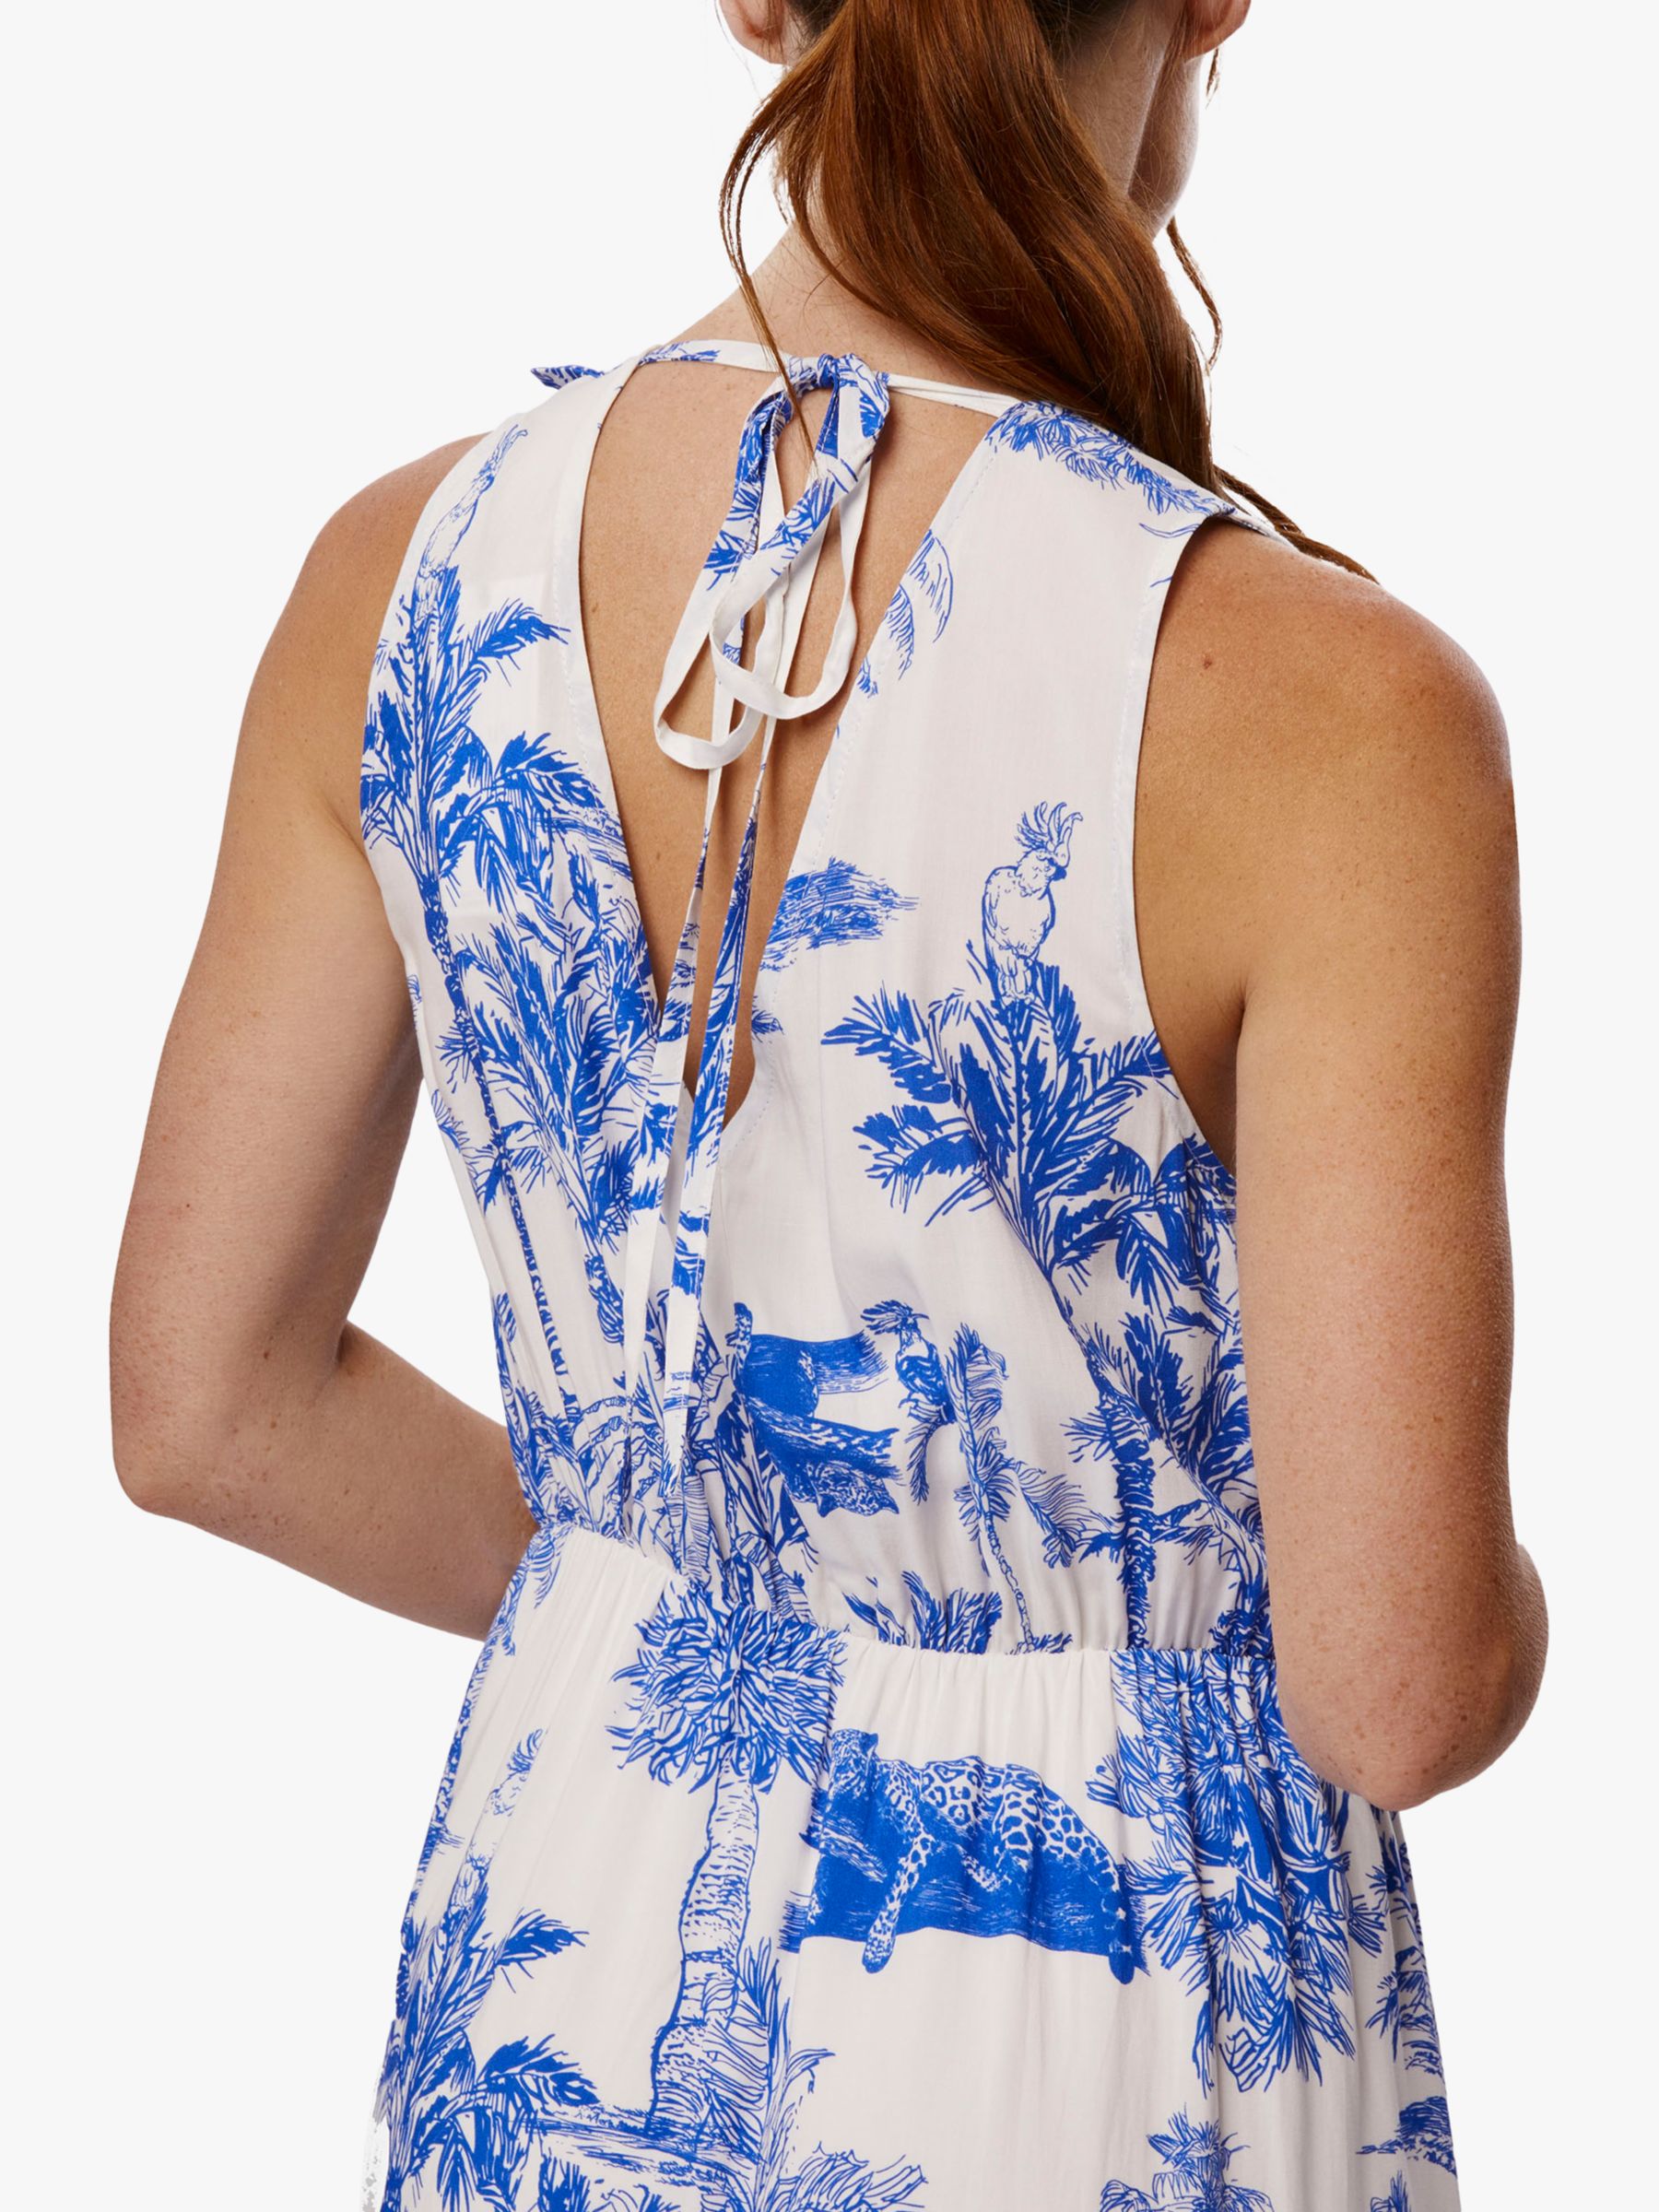 James Lakeland Palm Tree Ruched Maxi Dress, Blue, 8